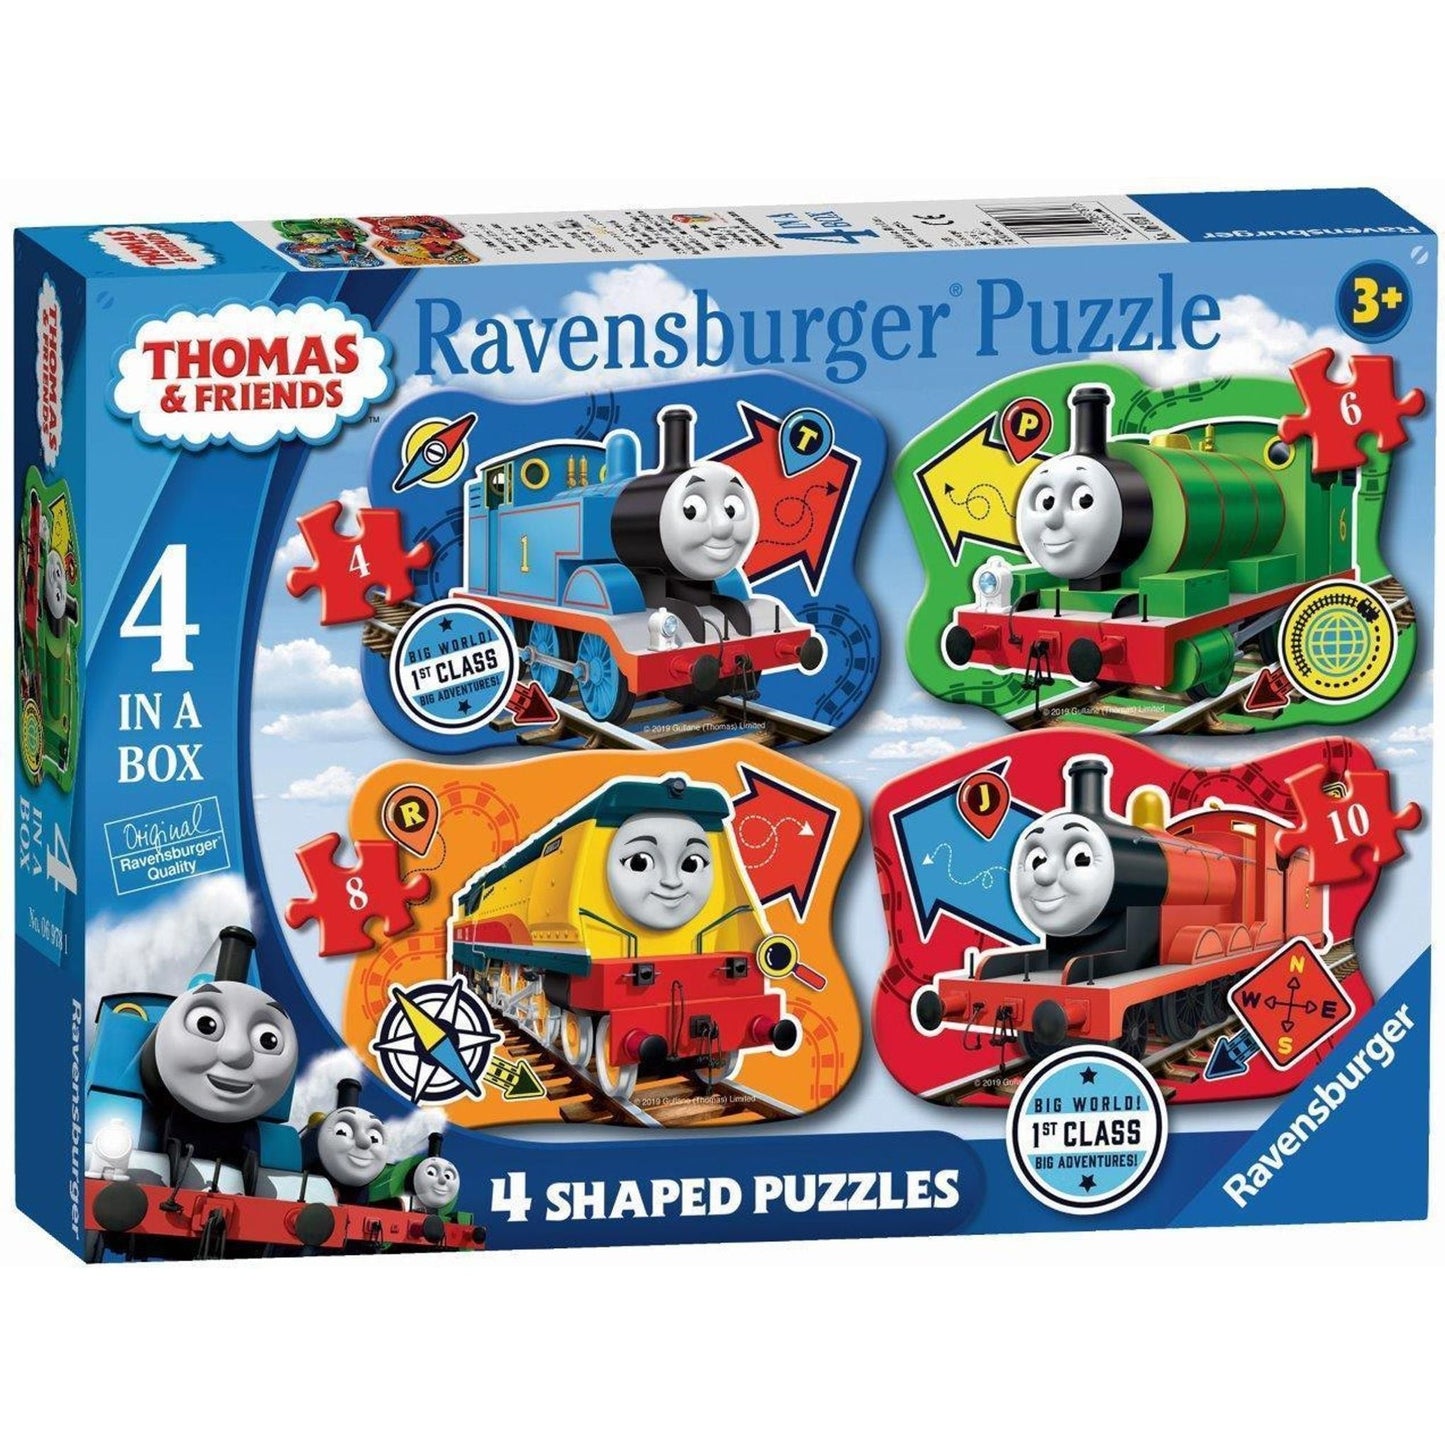 Ravensburger - 4 Shaped Puzzles - Thomas the Tank Engine - Toybox Tales